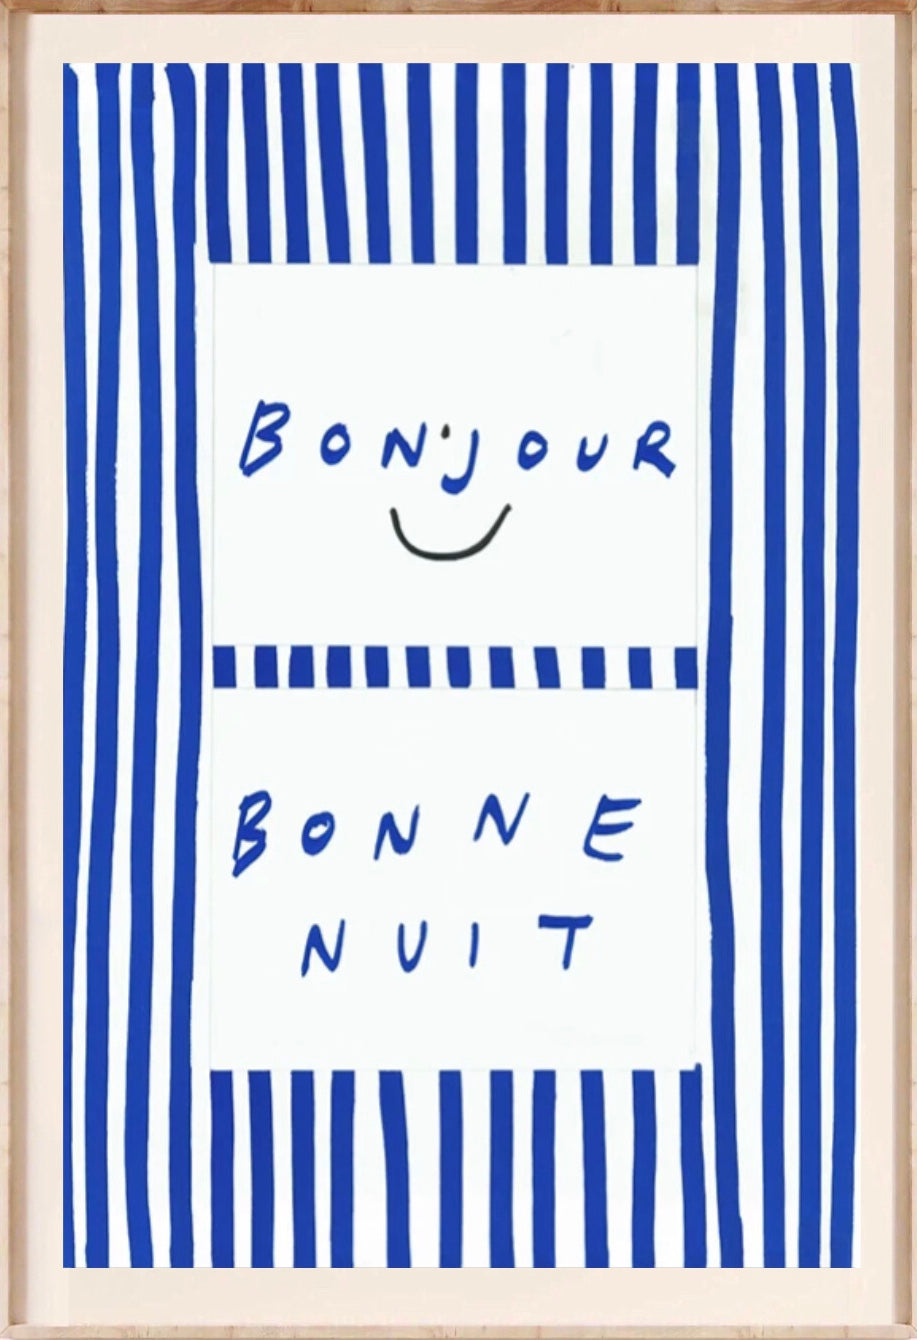 " bonjour / bonne nuit " poster